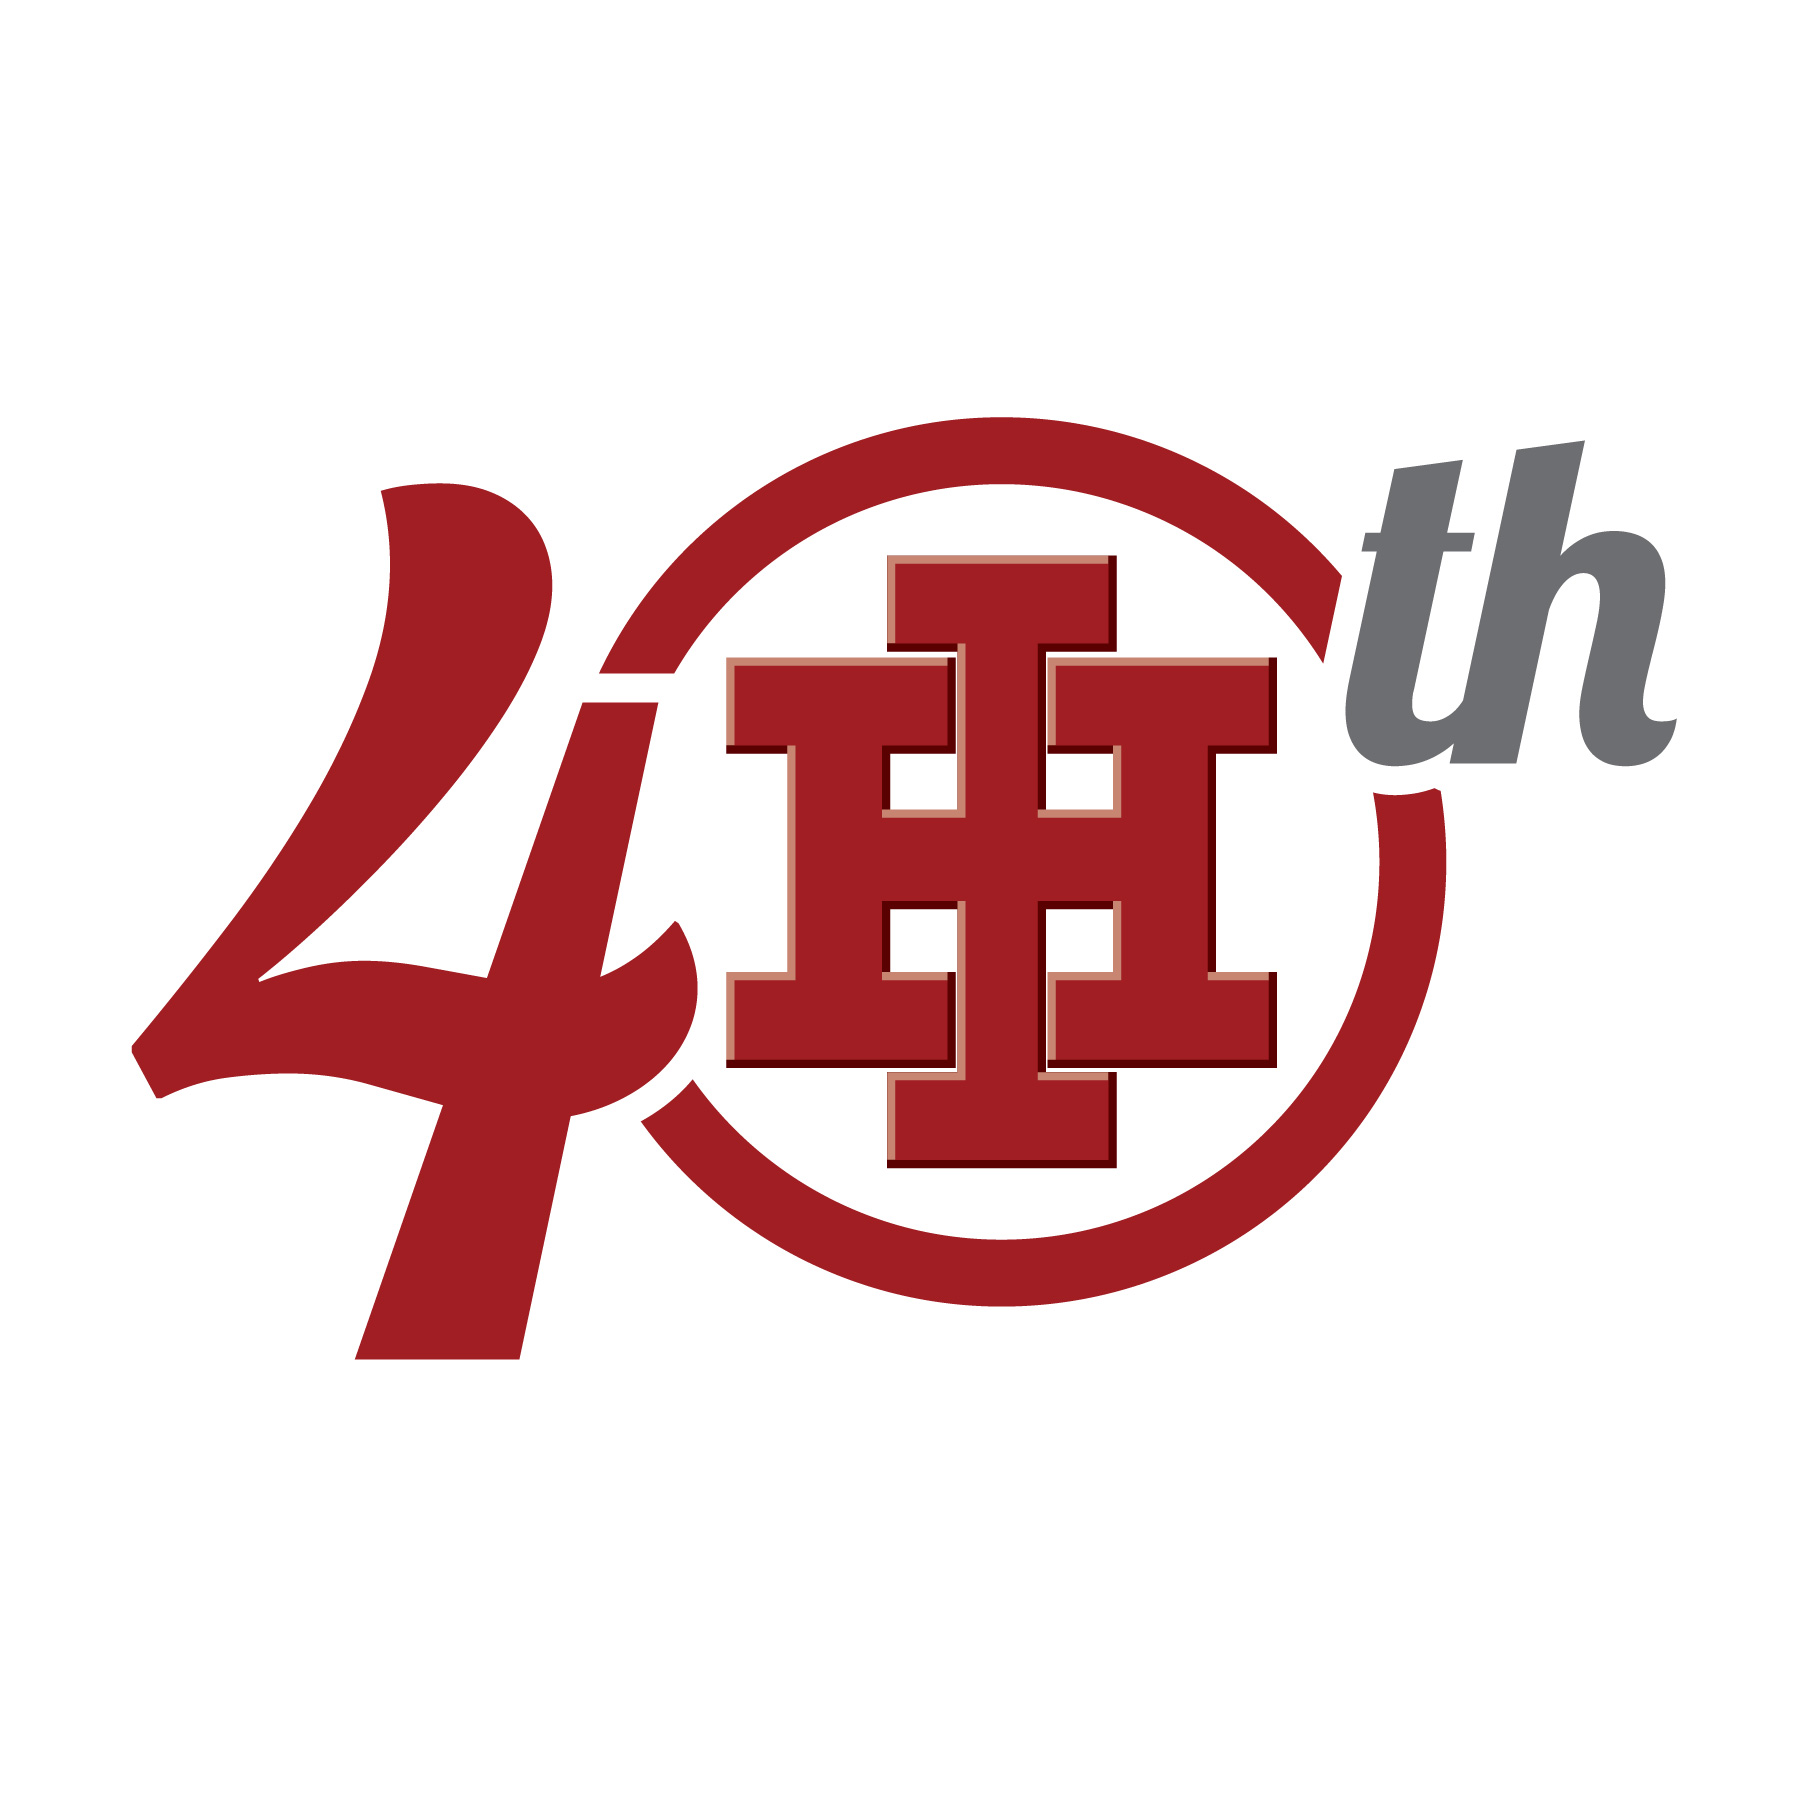 40th reunion logo